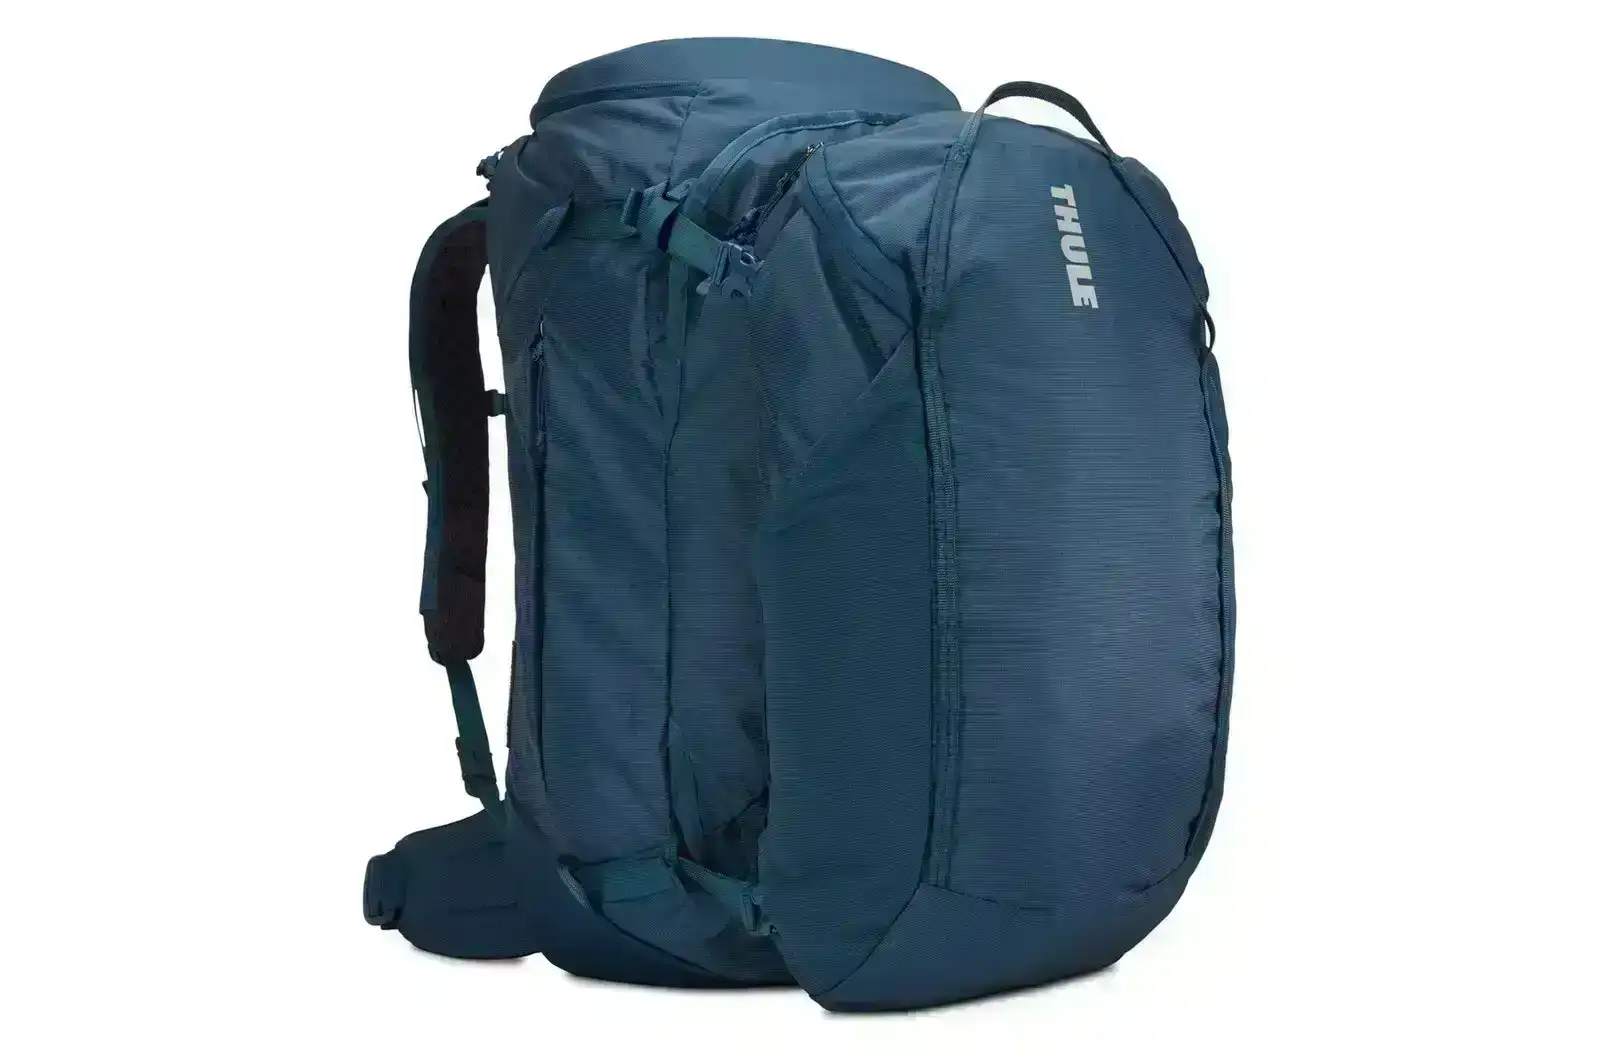 Thule Landmark 60L 55cm Female Travel Hiking/Camping Backpack Bag Majolica Blue